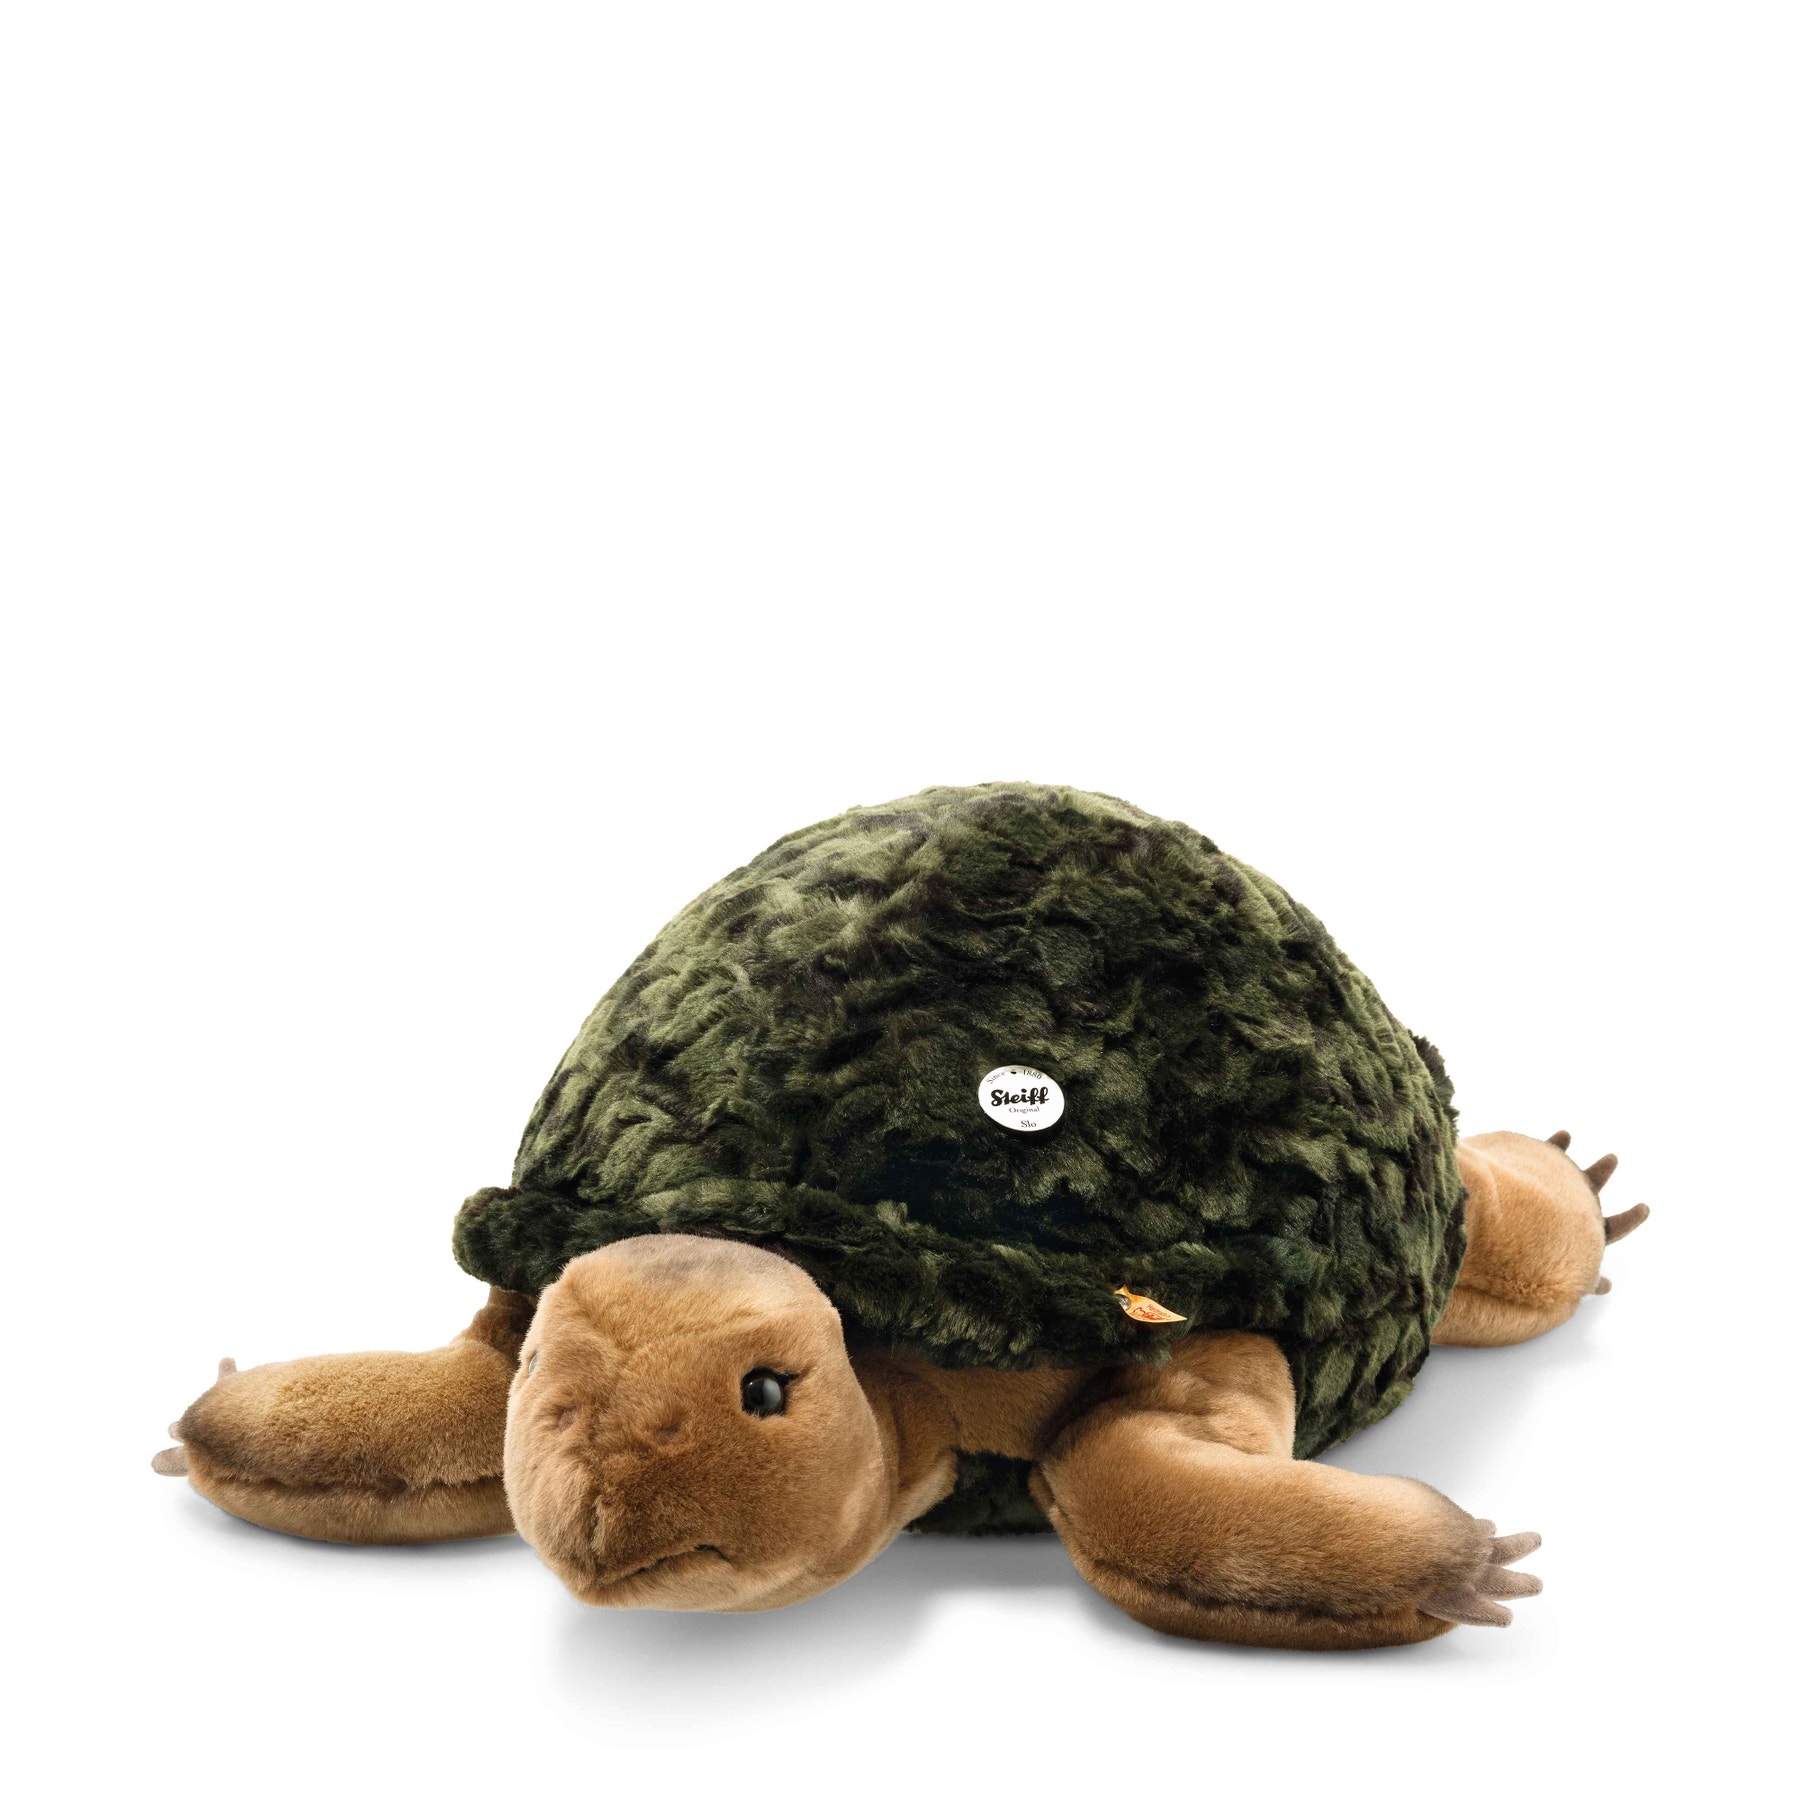 Slo tortoise